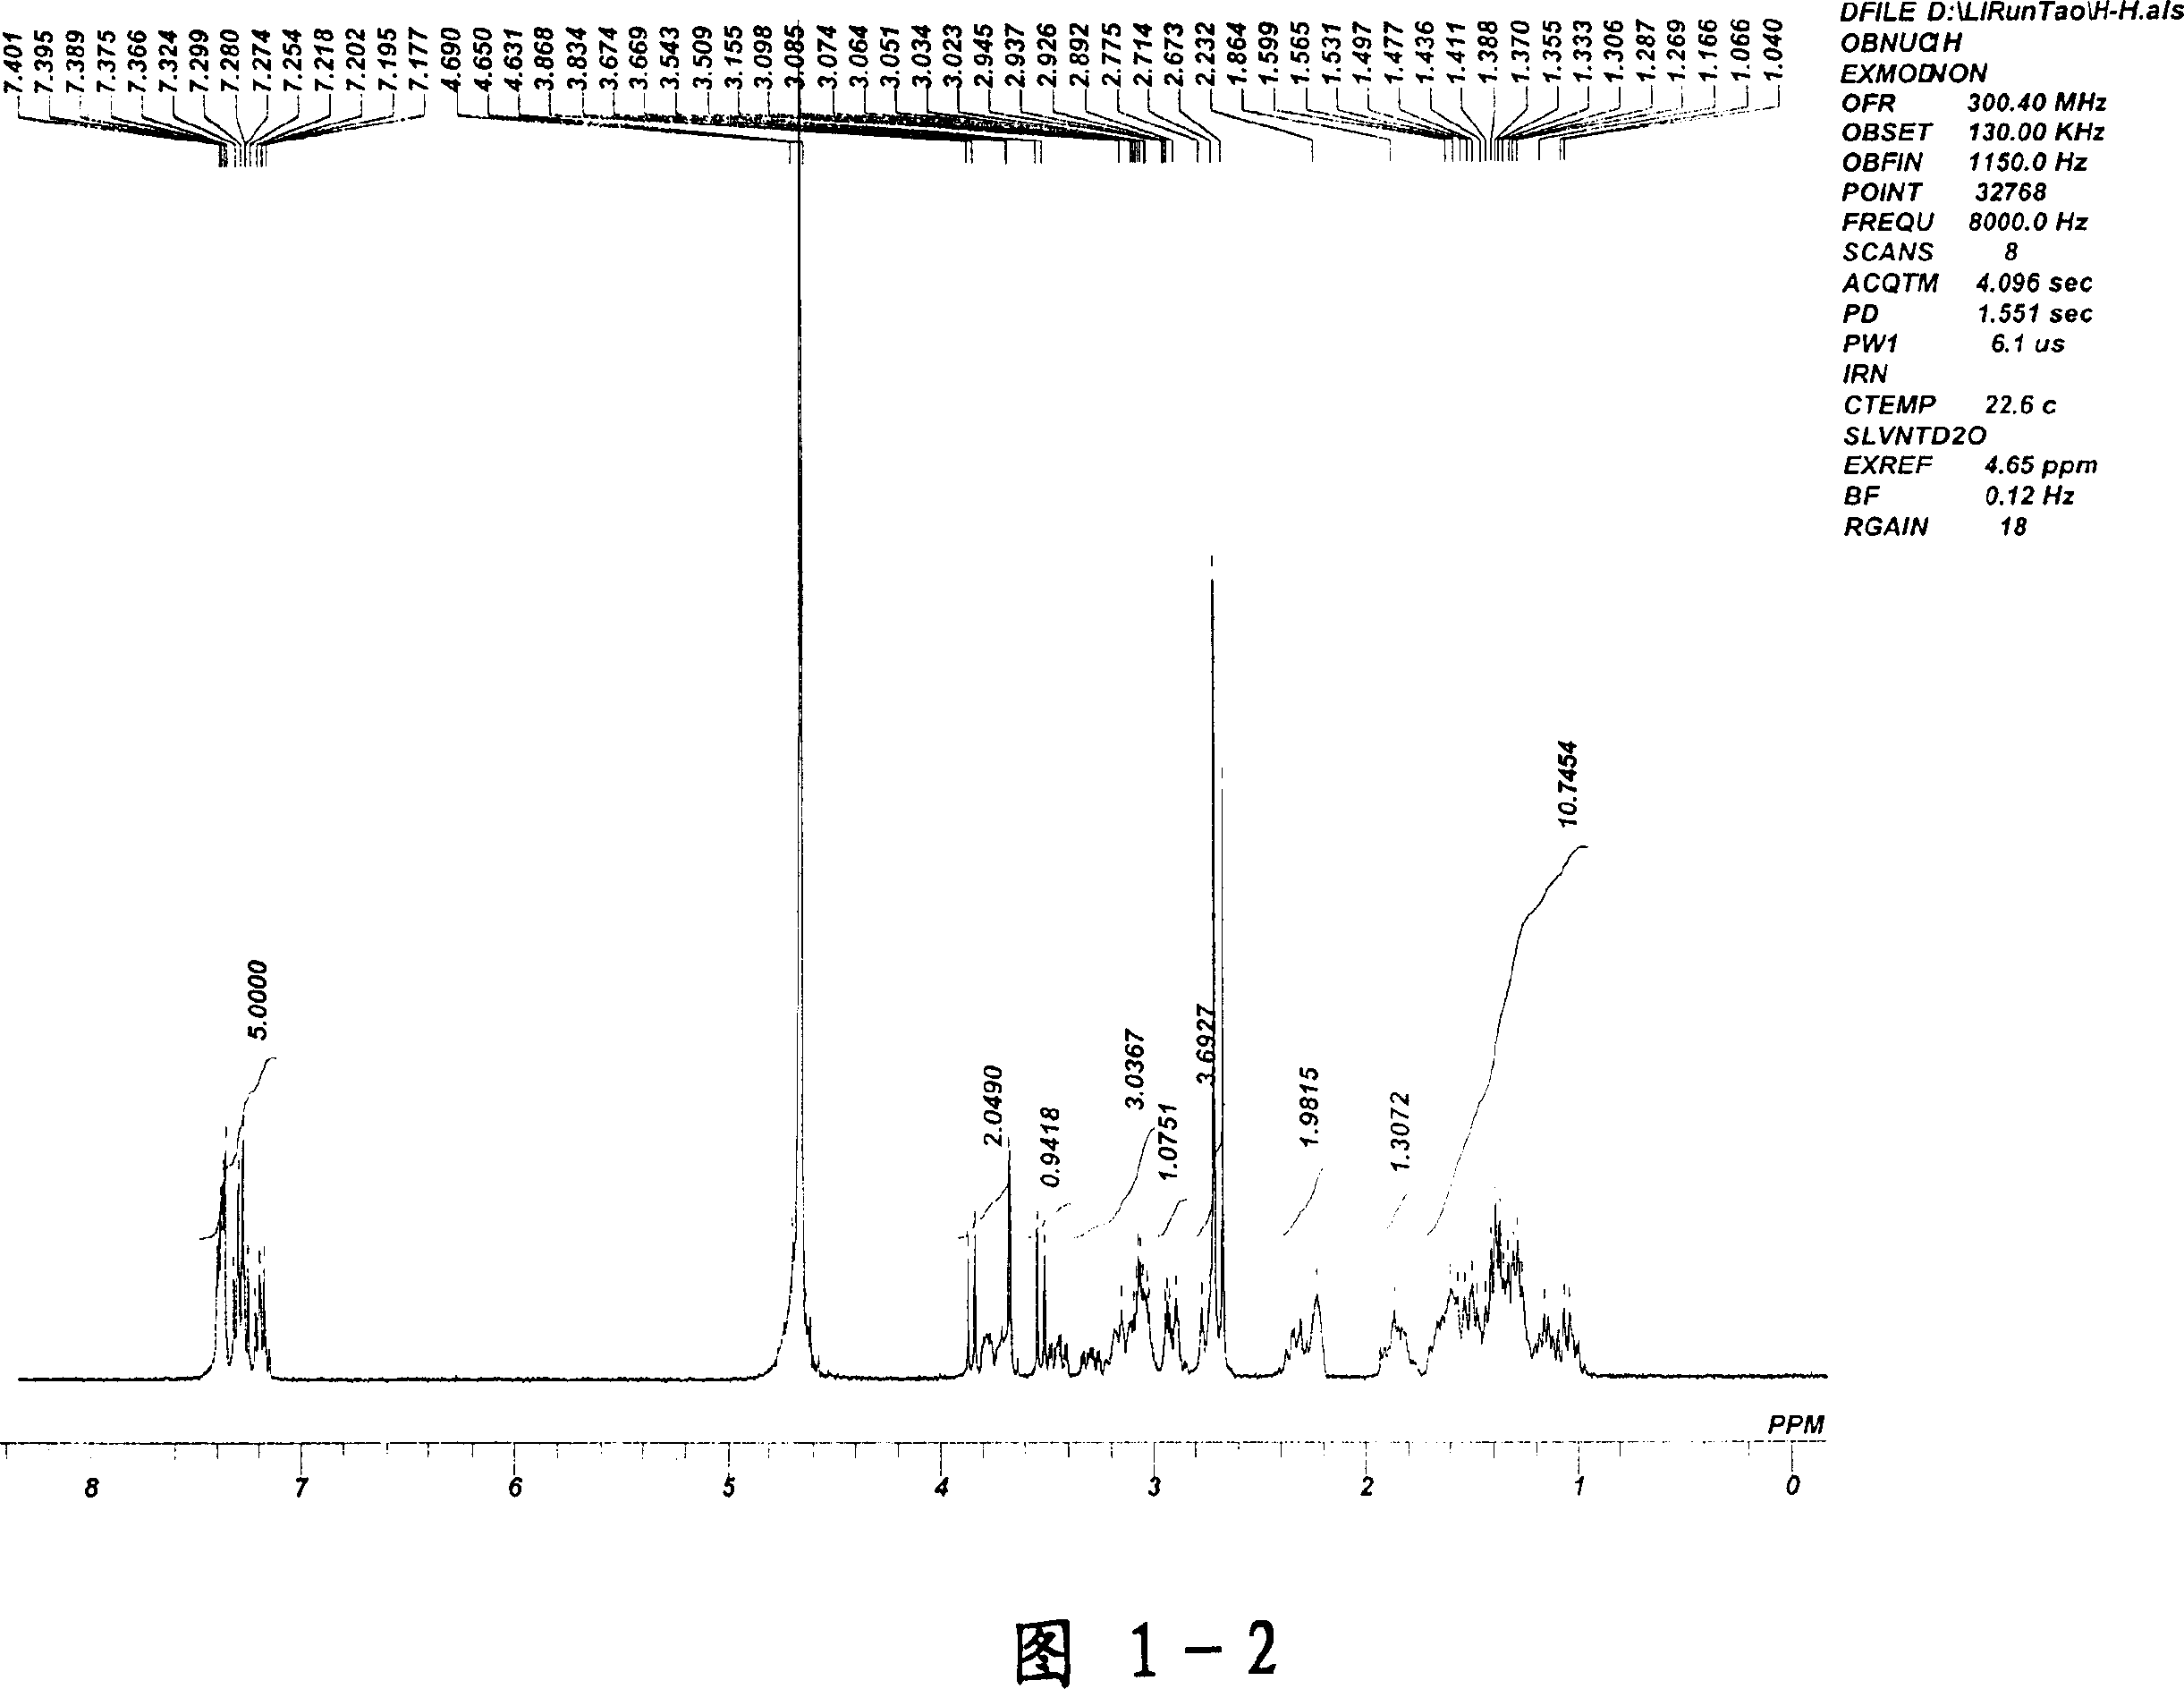 Penehyclidine quaternary ammonium salt and its derivative